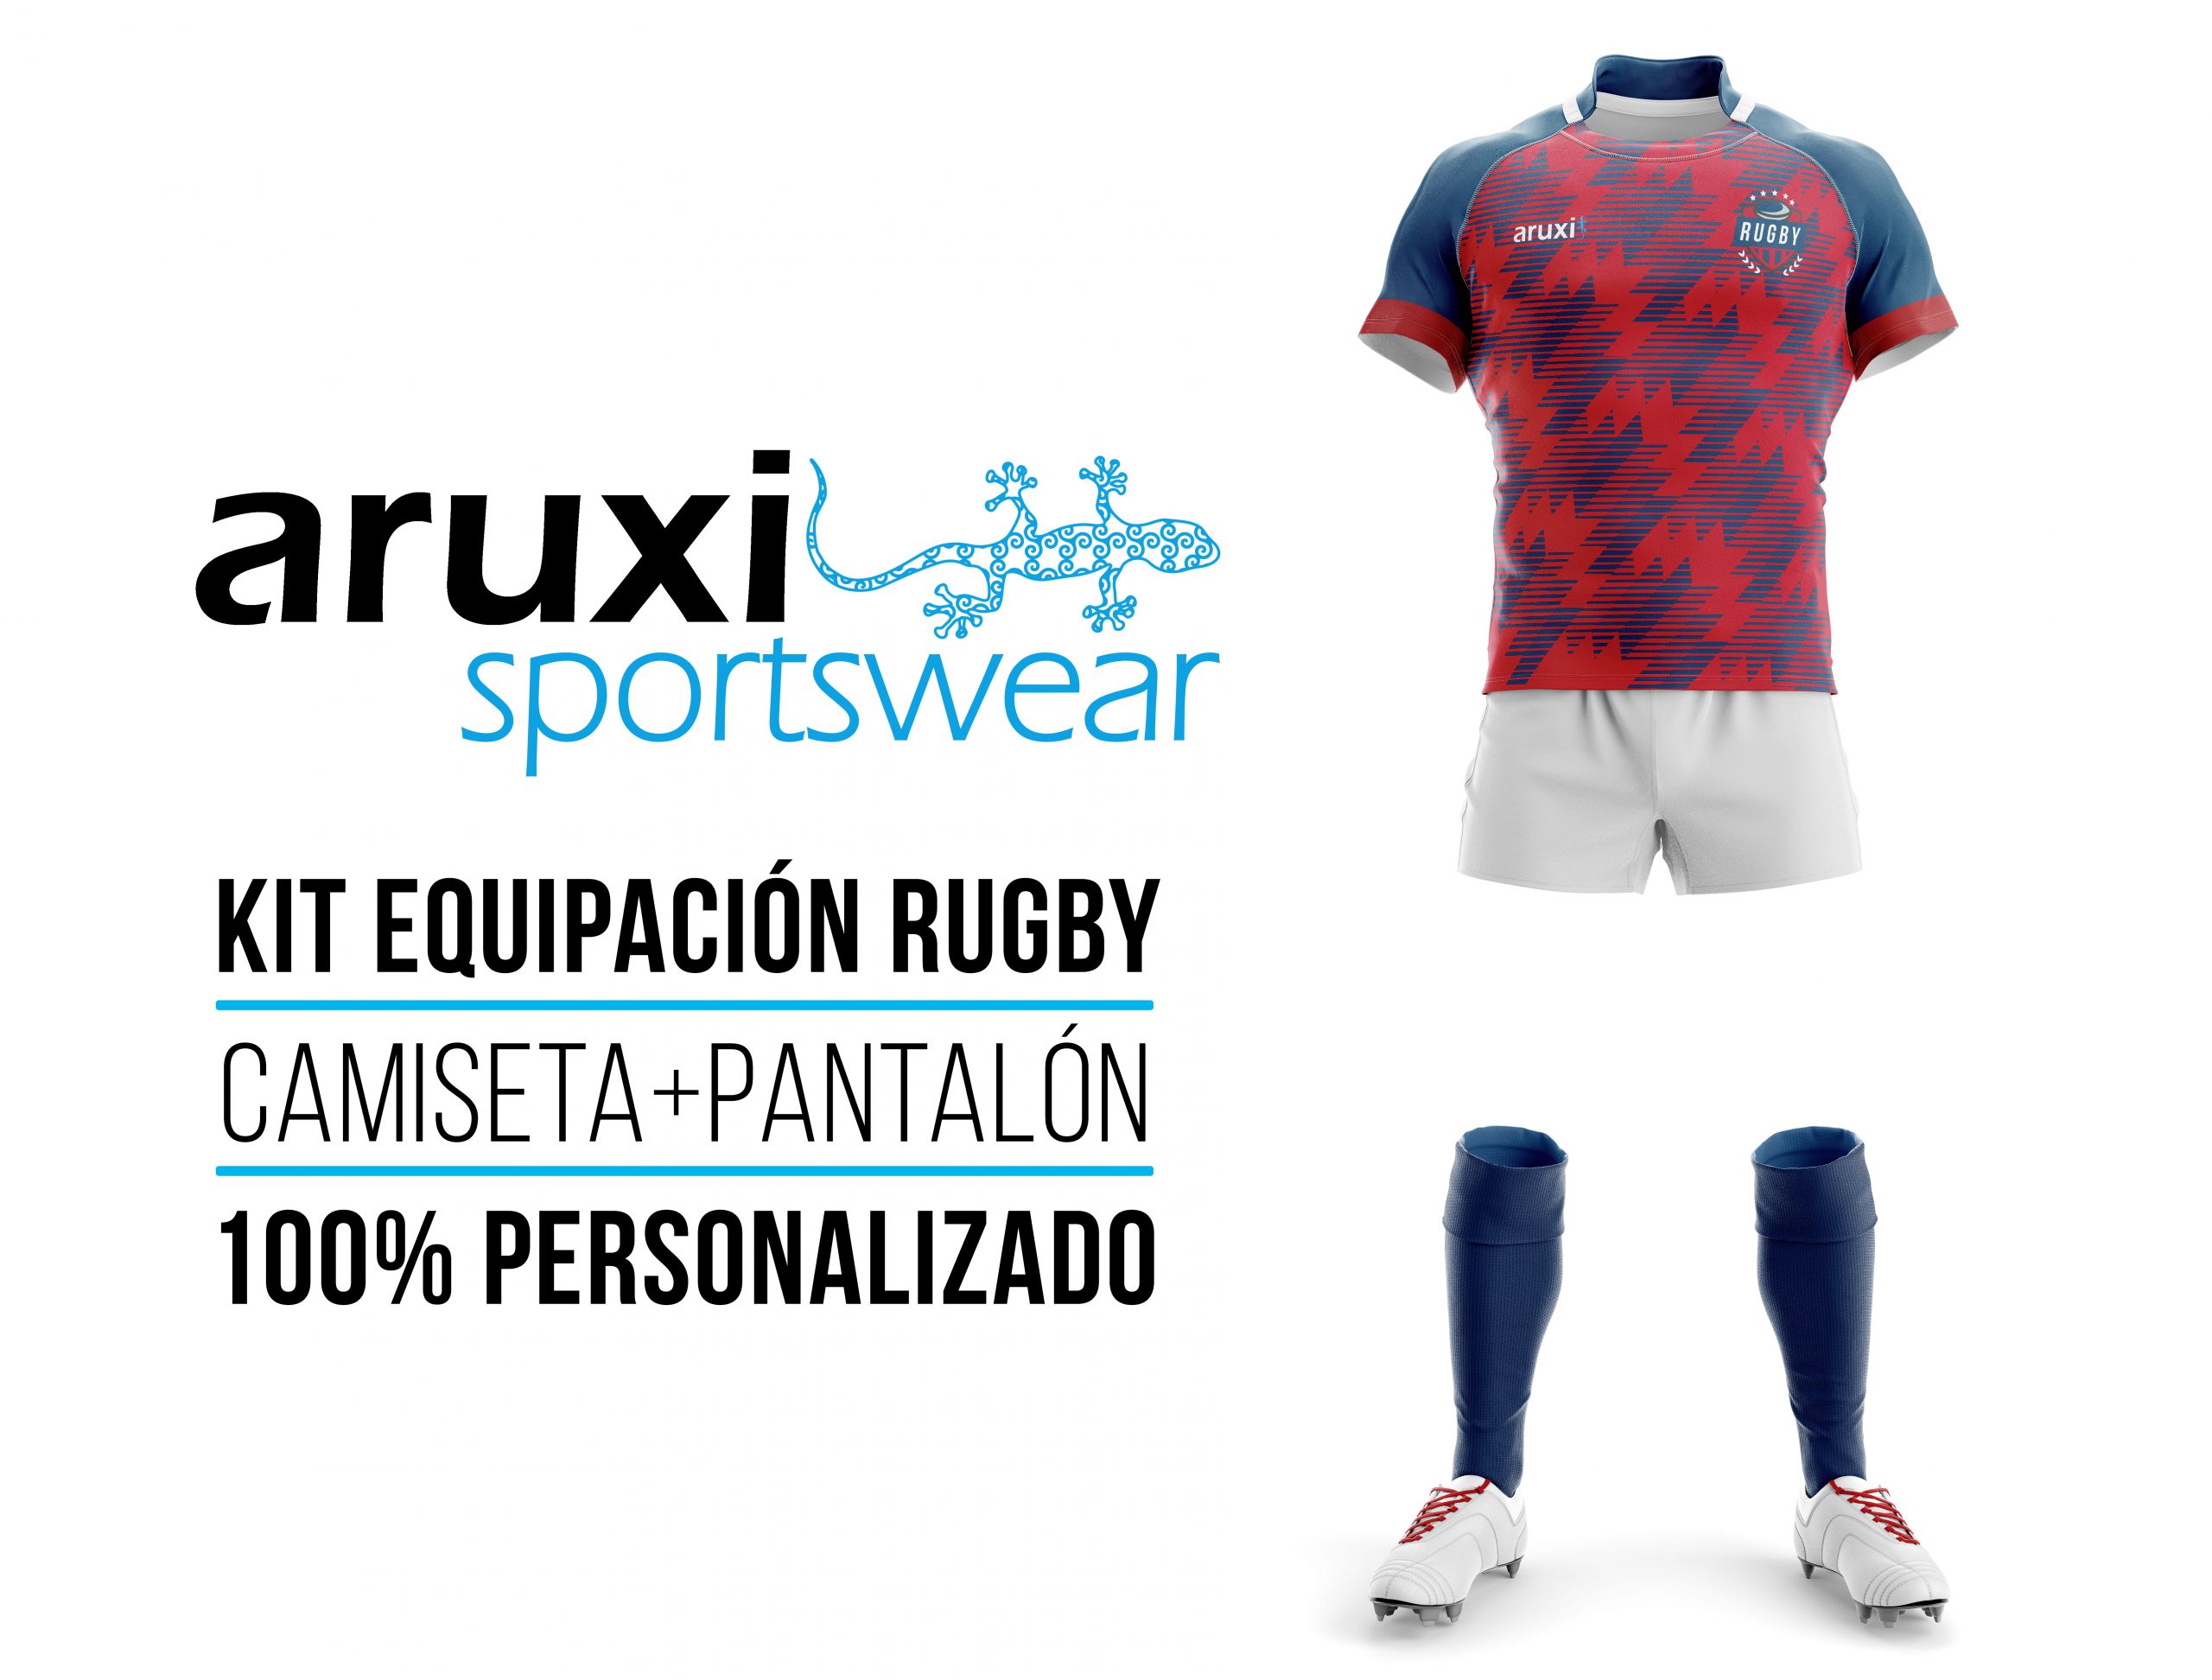 Kit Equipacion Rugby Aruxi